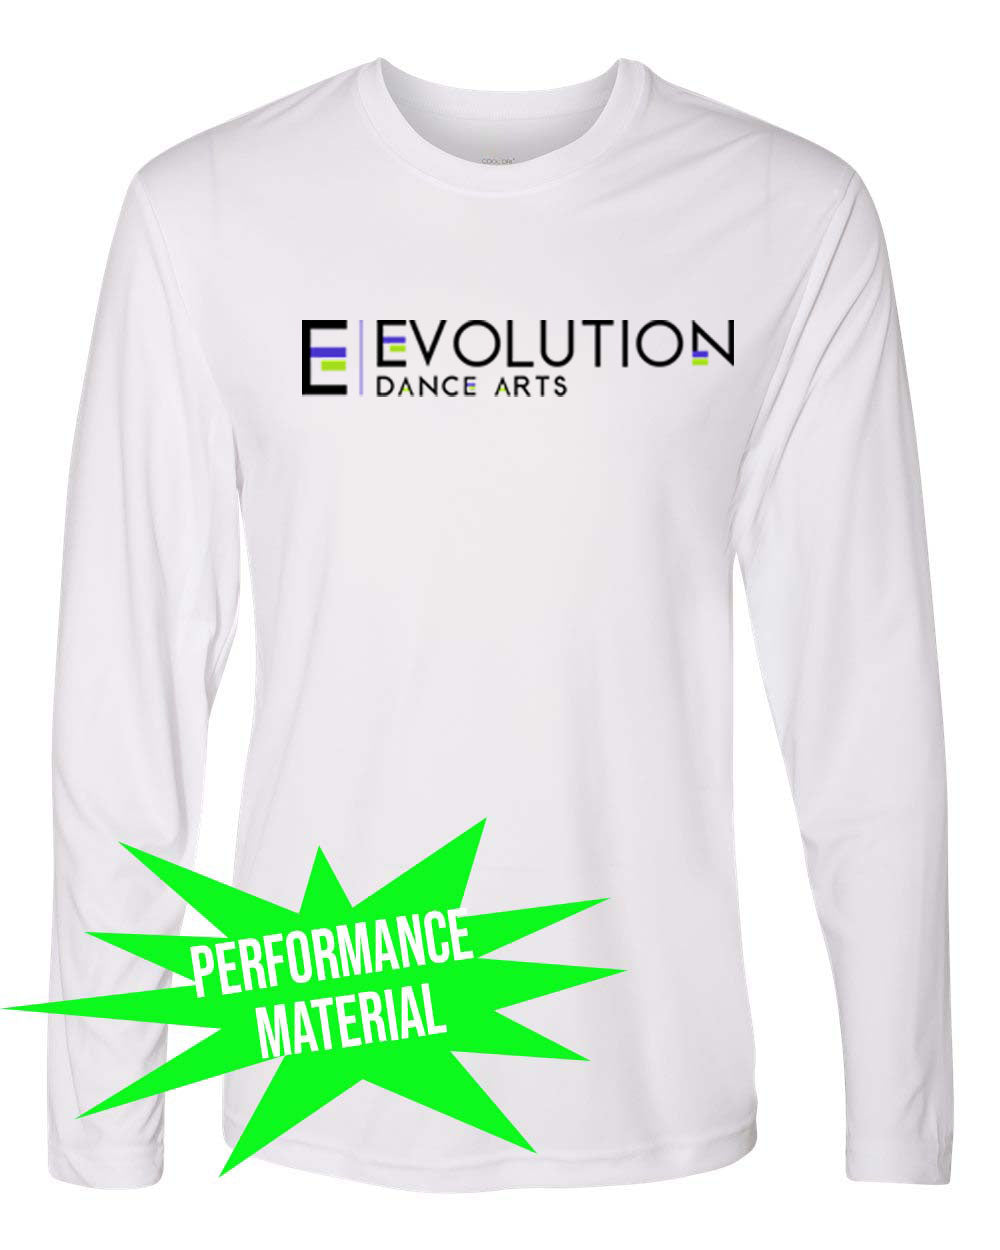 Evolution Dance Arts Performance Material Design 1 Long Sleeve Shirt